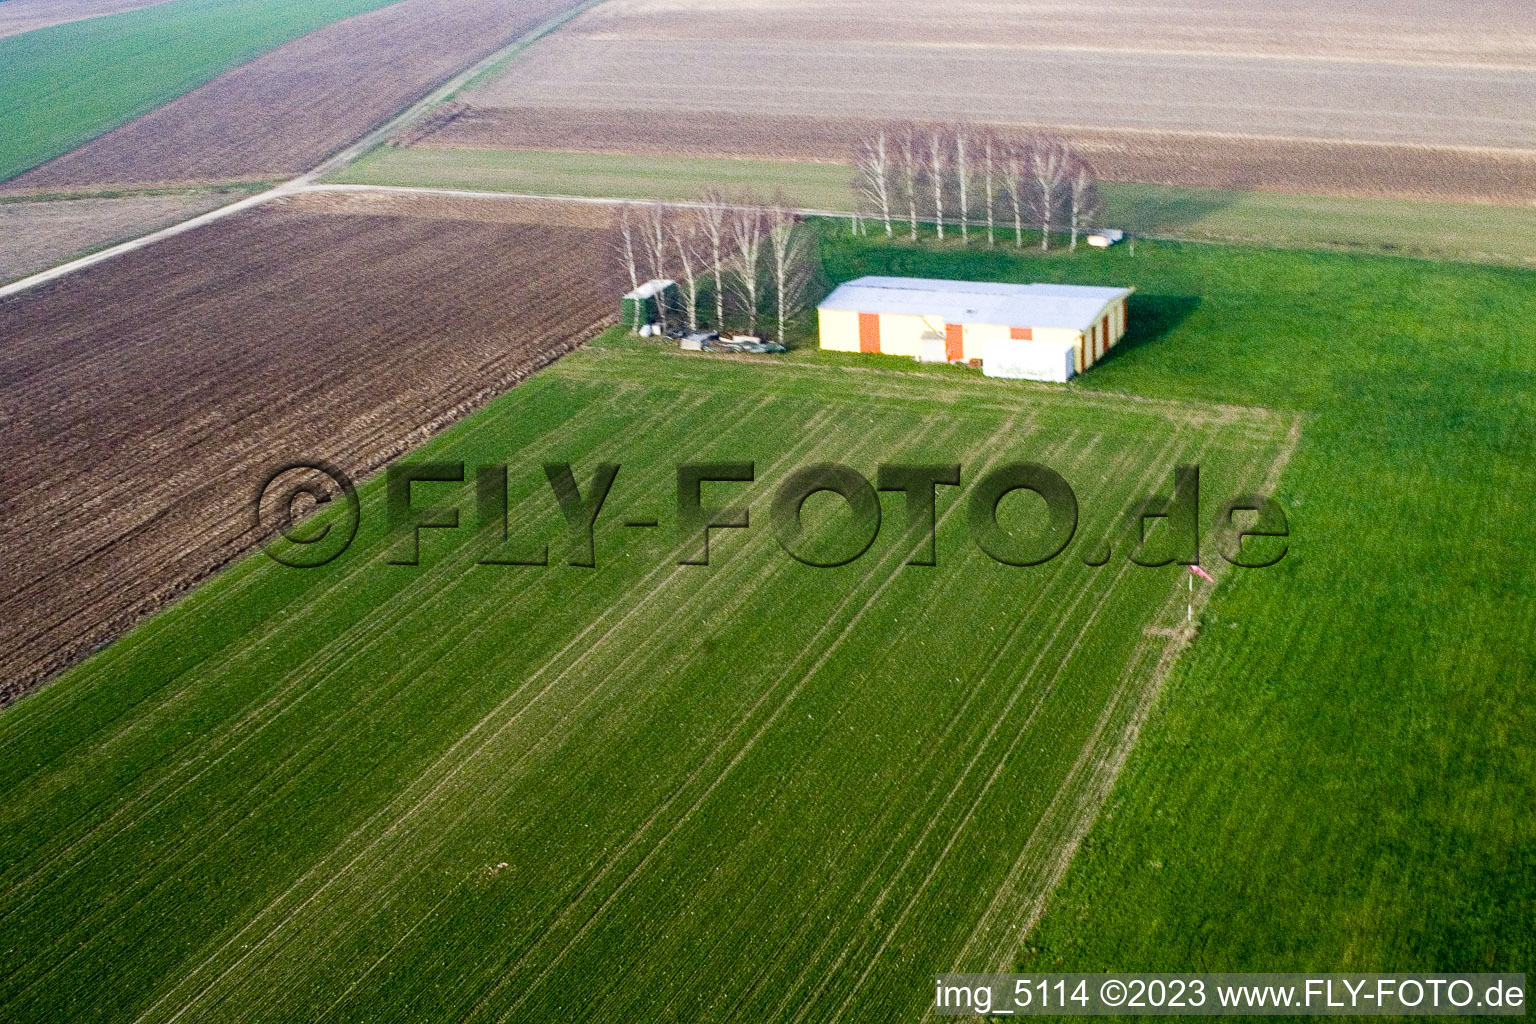 Luftbild von Seebach UL-Flugplatz im Bundesland Bas-Rhin, Frankreich